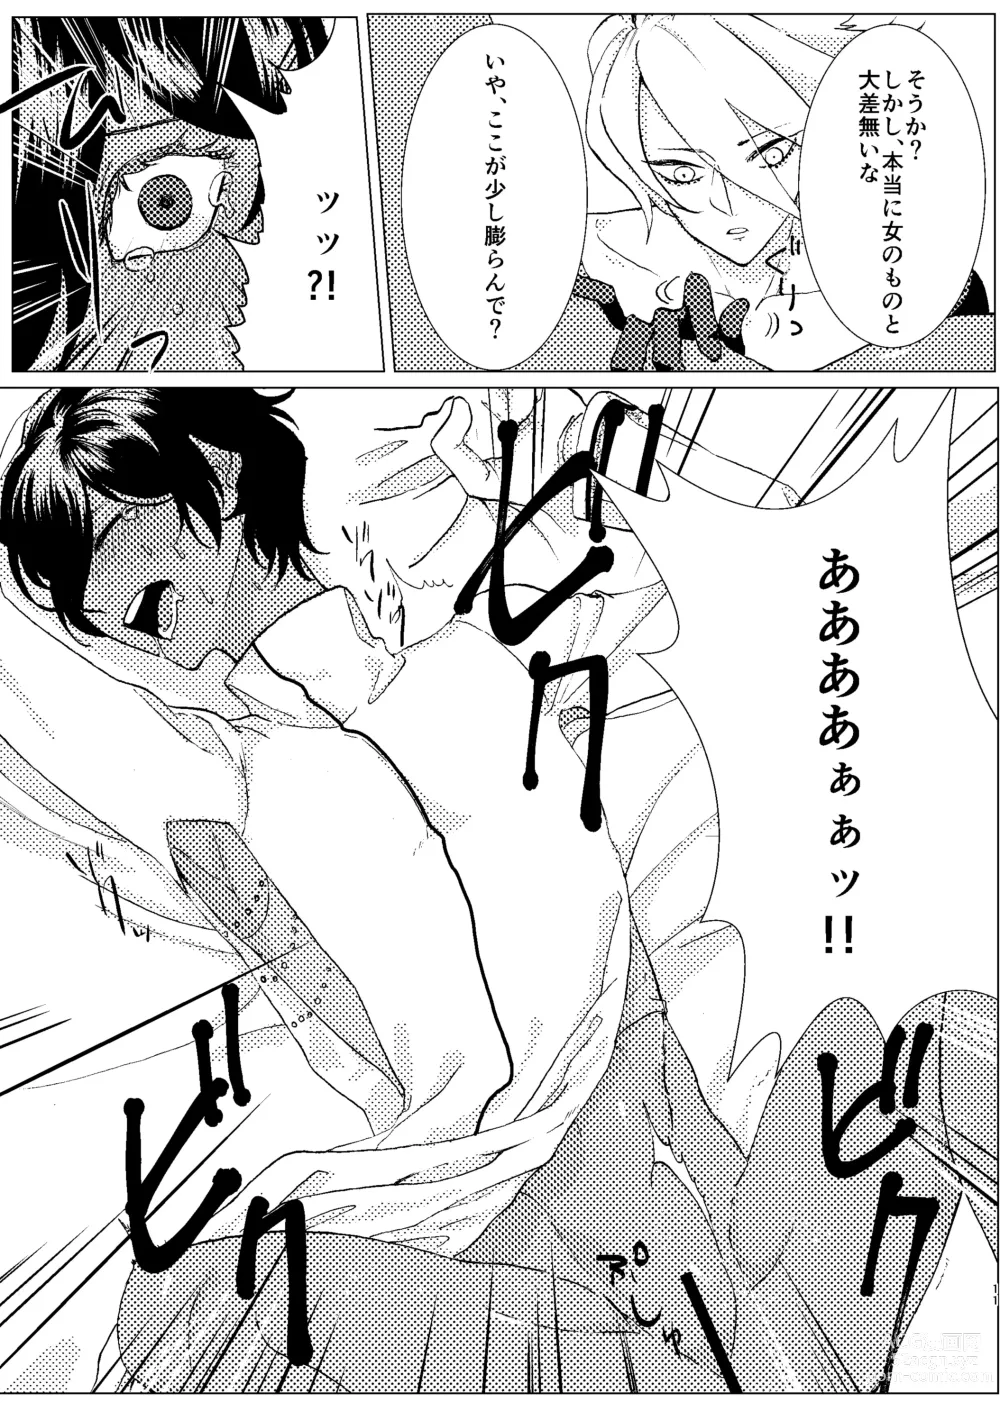 Page 10 of doujinshi honeydew nightmare